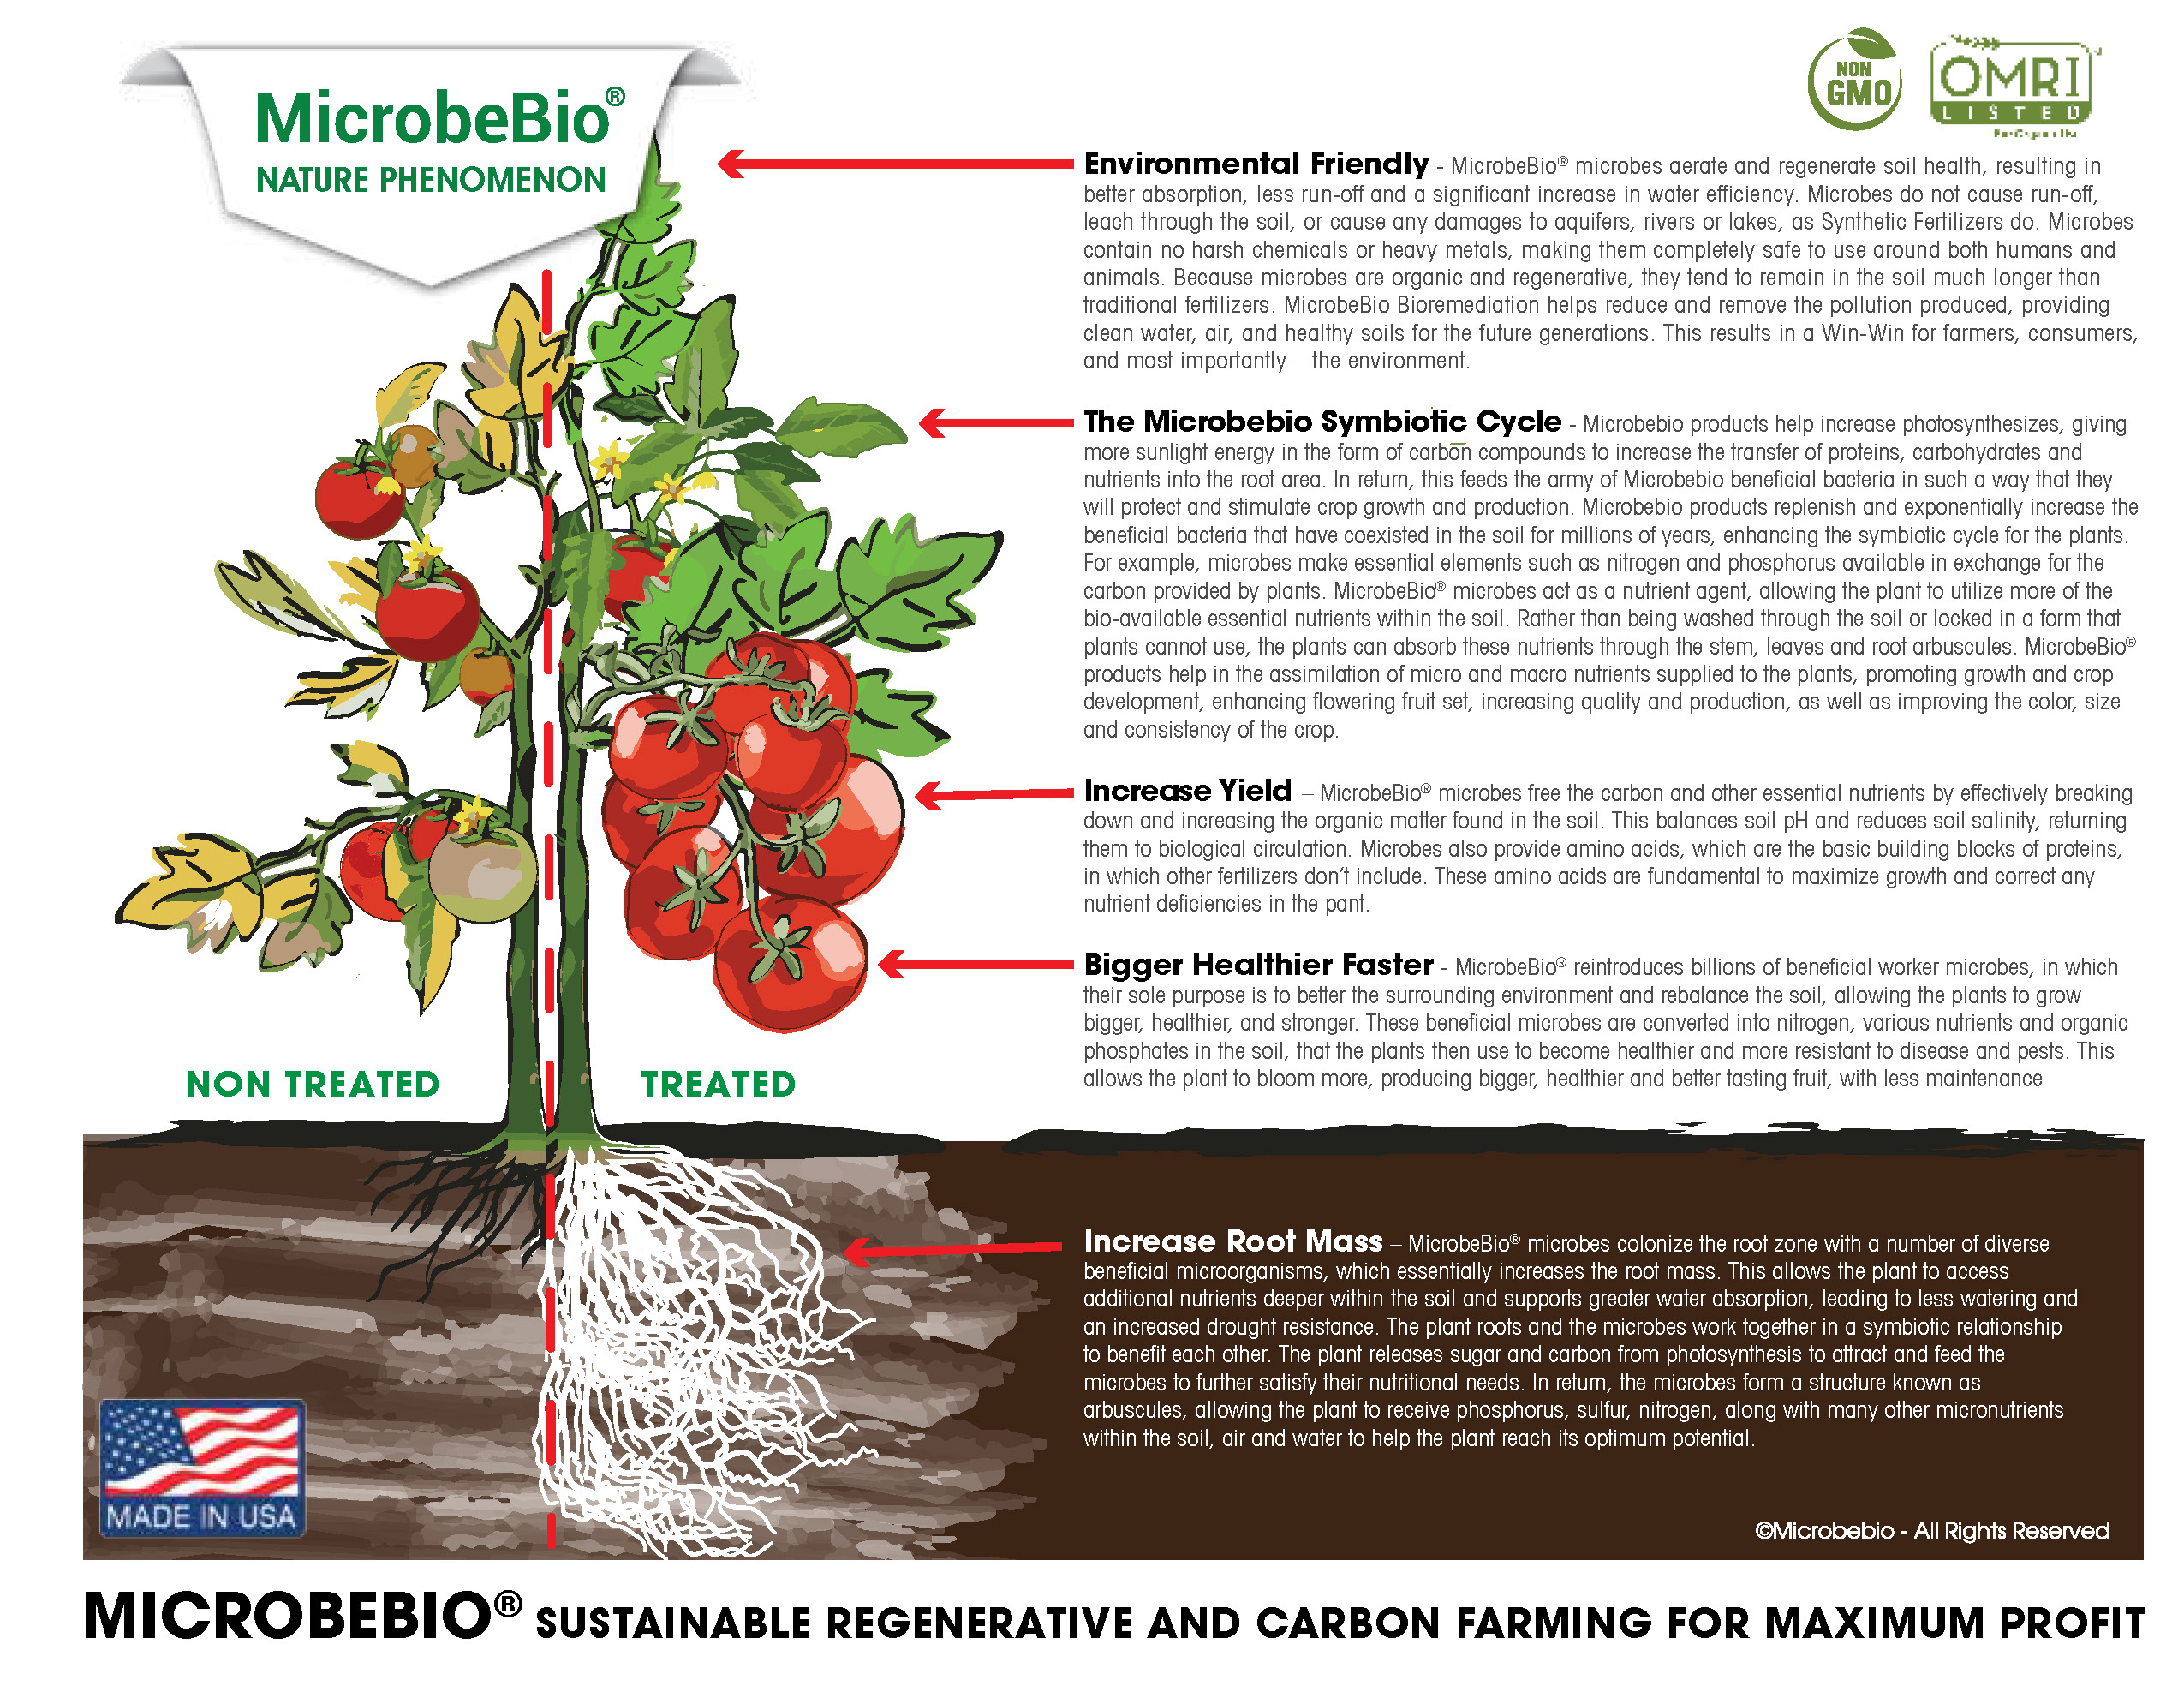 MICROBEBIO microbial fertilizer